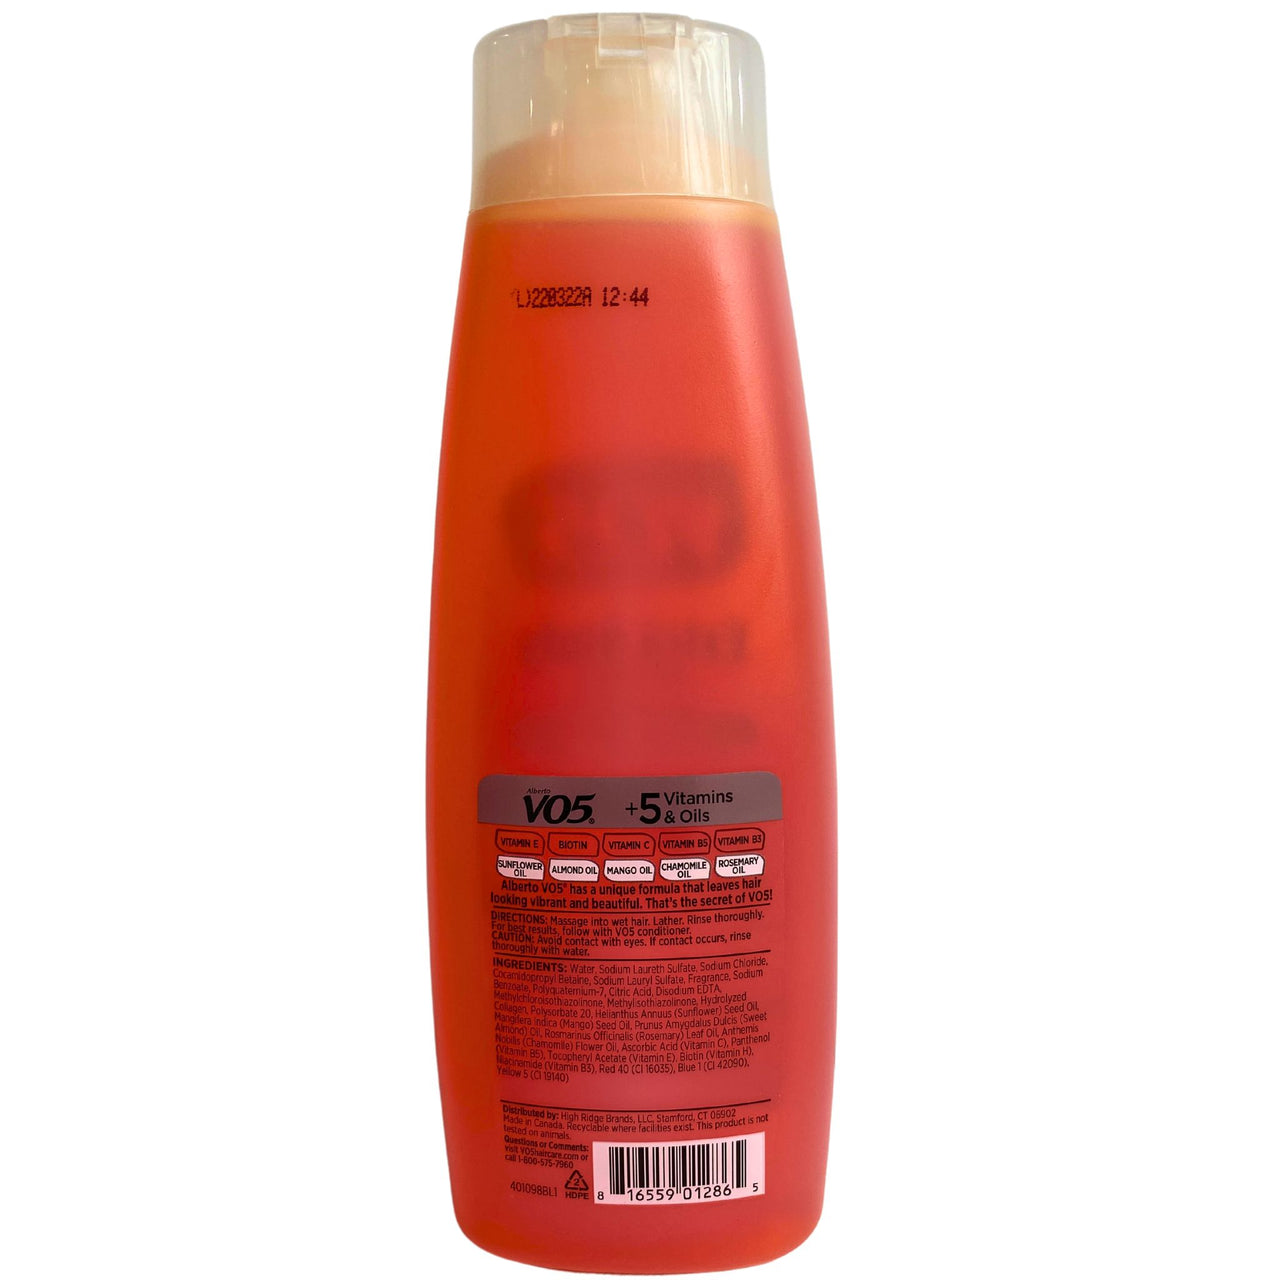 Alberto V05 Extra Body will Collagen Volumizing Shampoo for Body & Bounce + 5 Vitamins & Oils 12.5OZ (48 Pcs Lot)